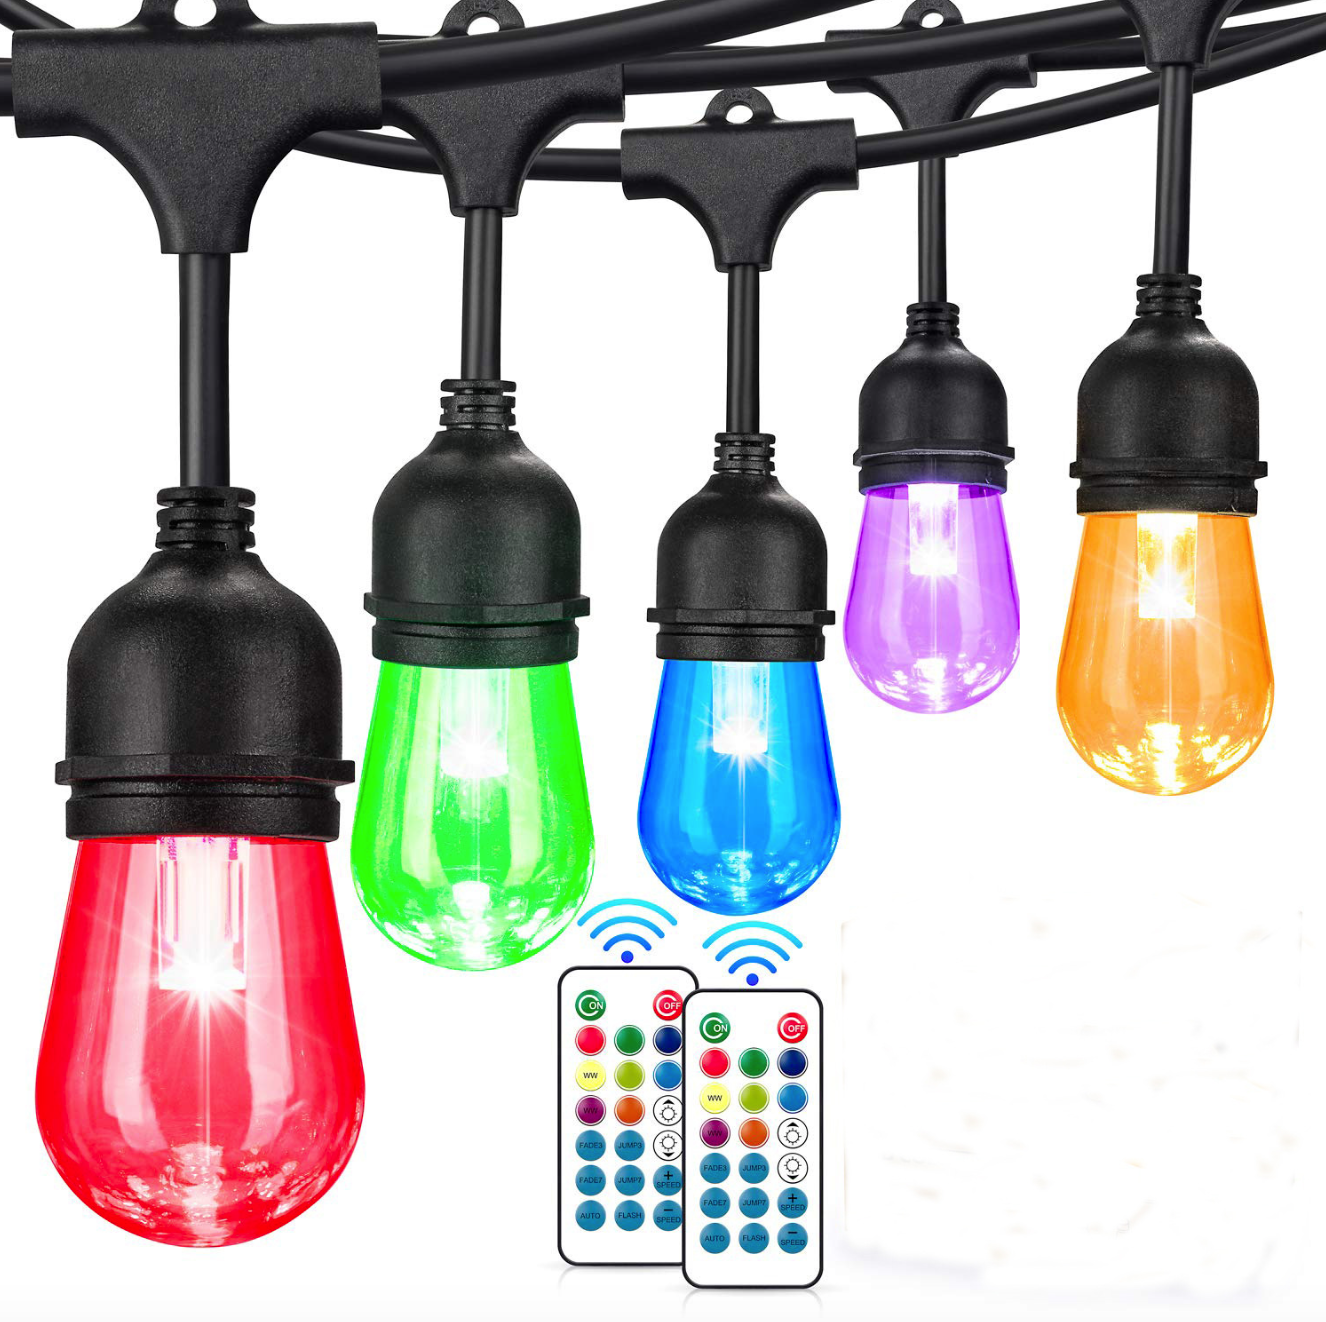 2022 Best selling S14 RGB string lighting remote control bulbs xmas decoration lighting